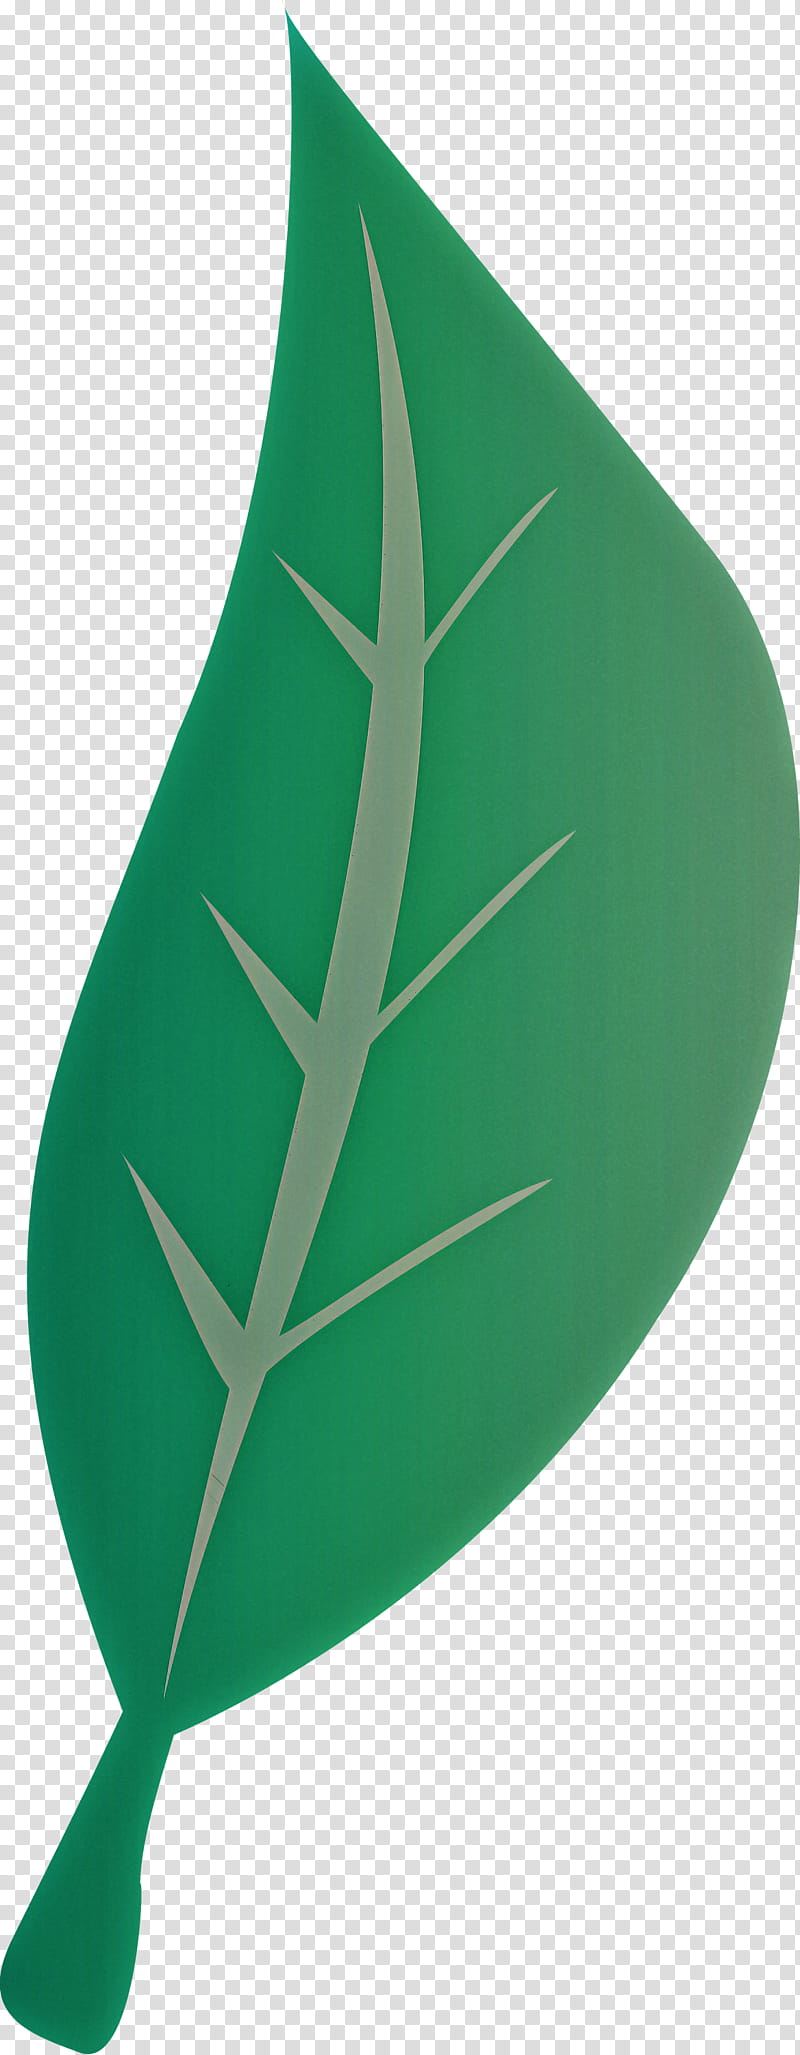 Monstera, Leaf, Plant Stem, Houseplant, Dumb Canes, Phalaenopsis Schilleriana, Guiana Chestnut, Ornamental Plant transparent background PNG clipart